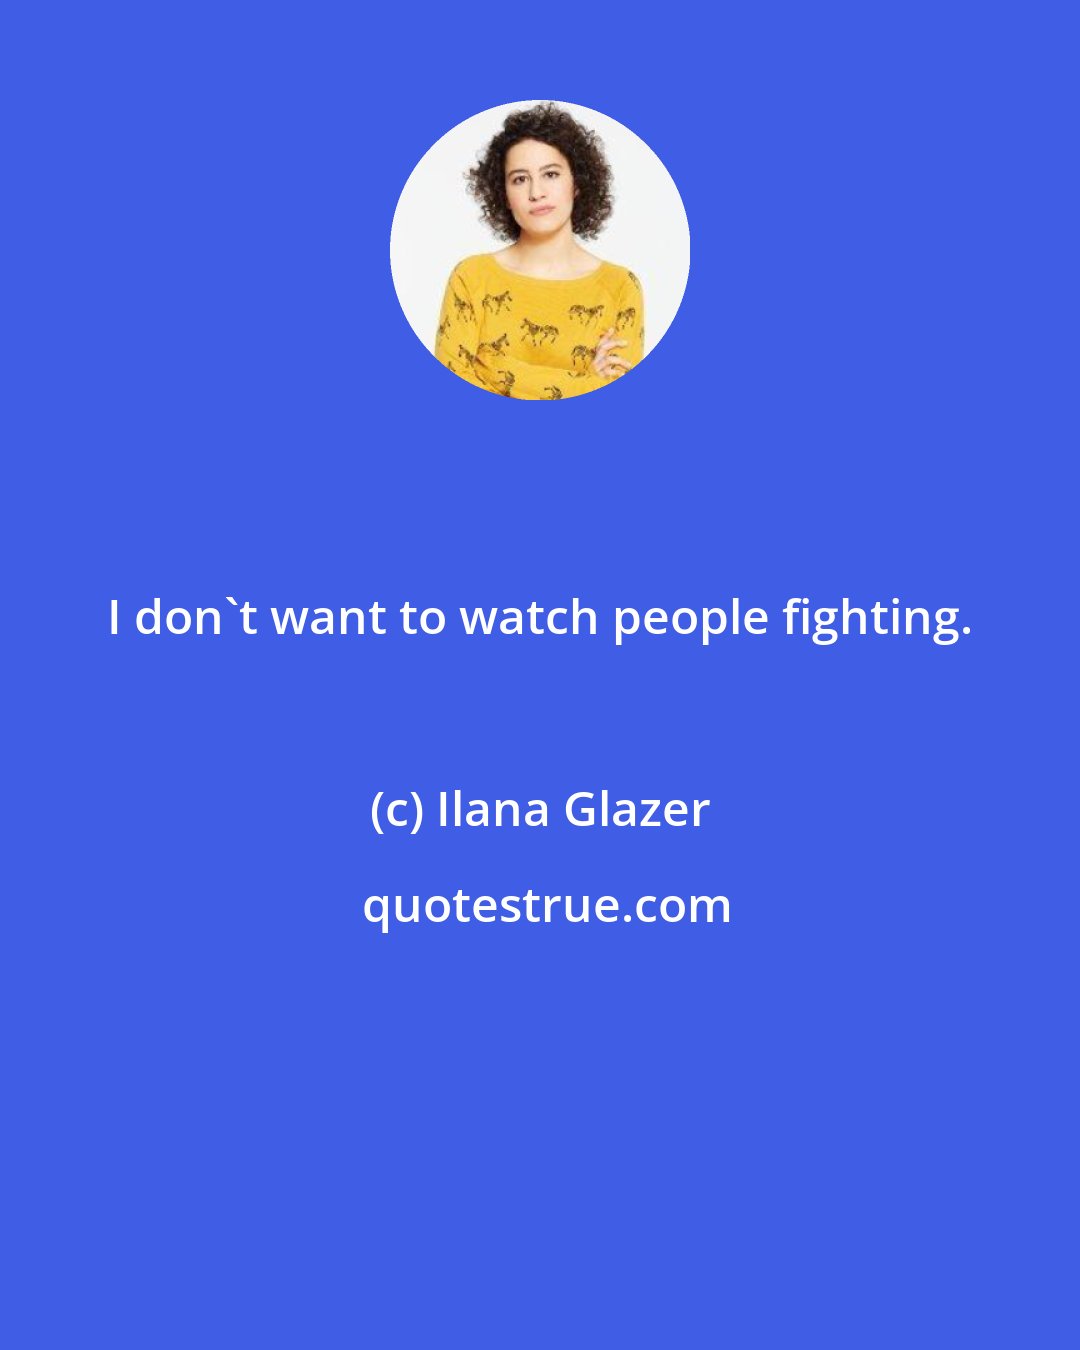 Ilana Glazer: I don't want to watch people fighting.